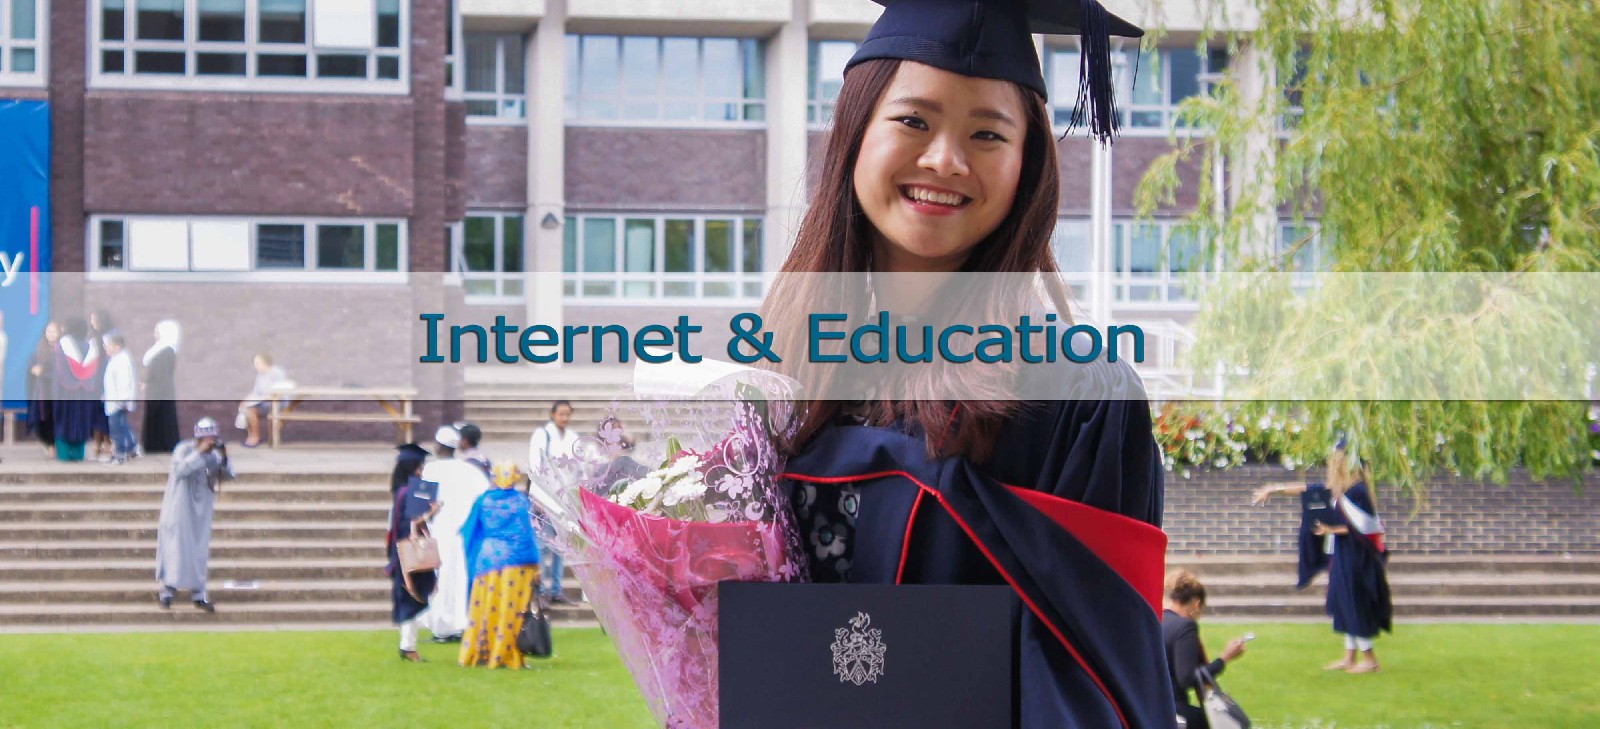 Internet & Education